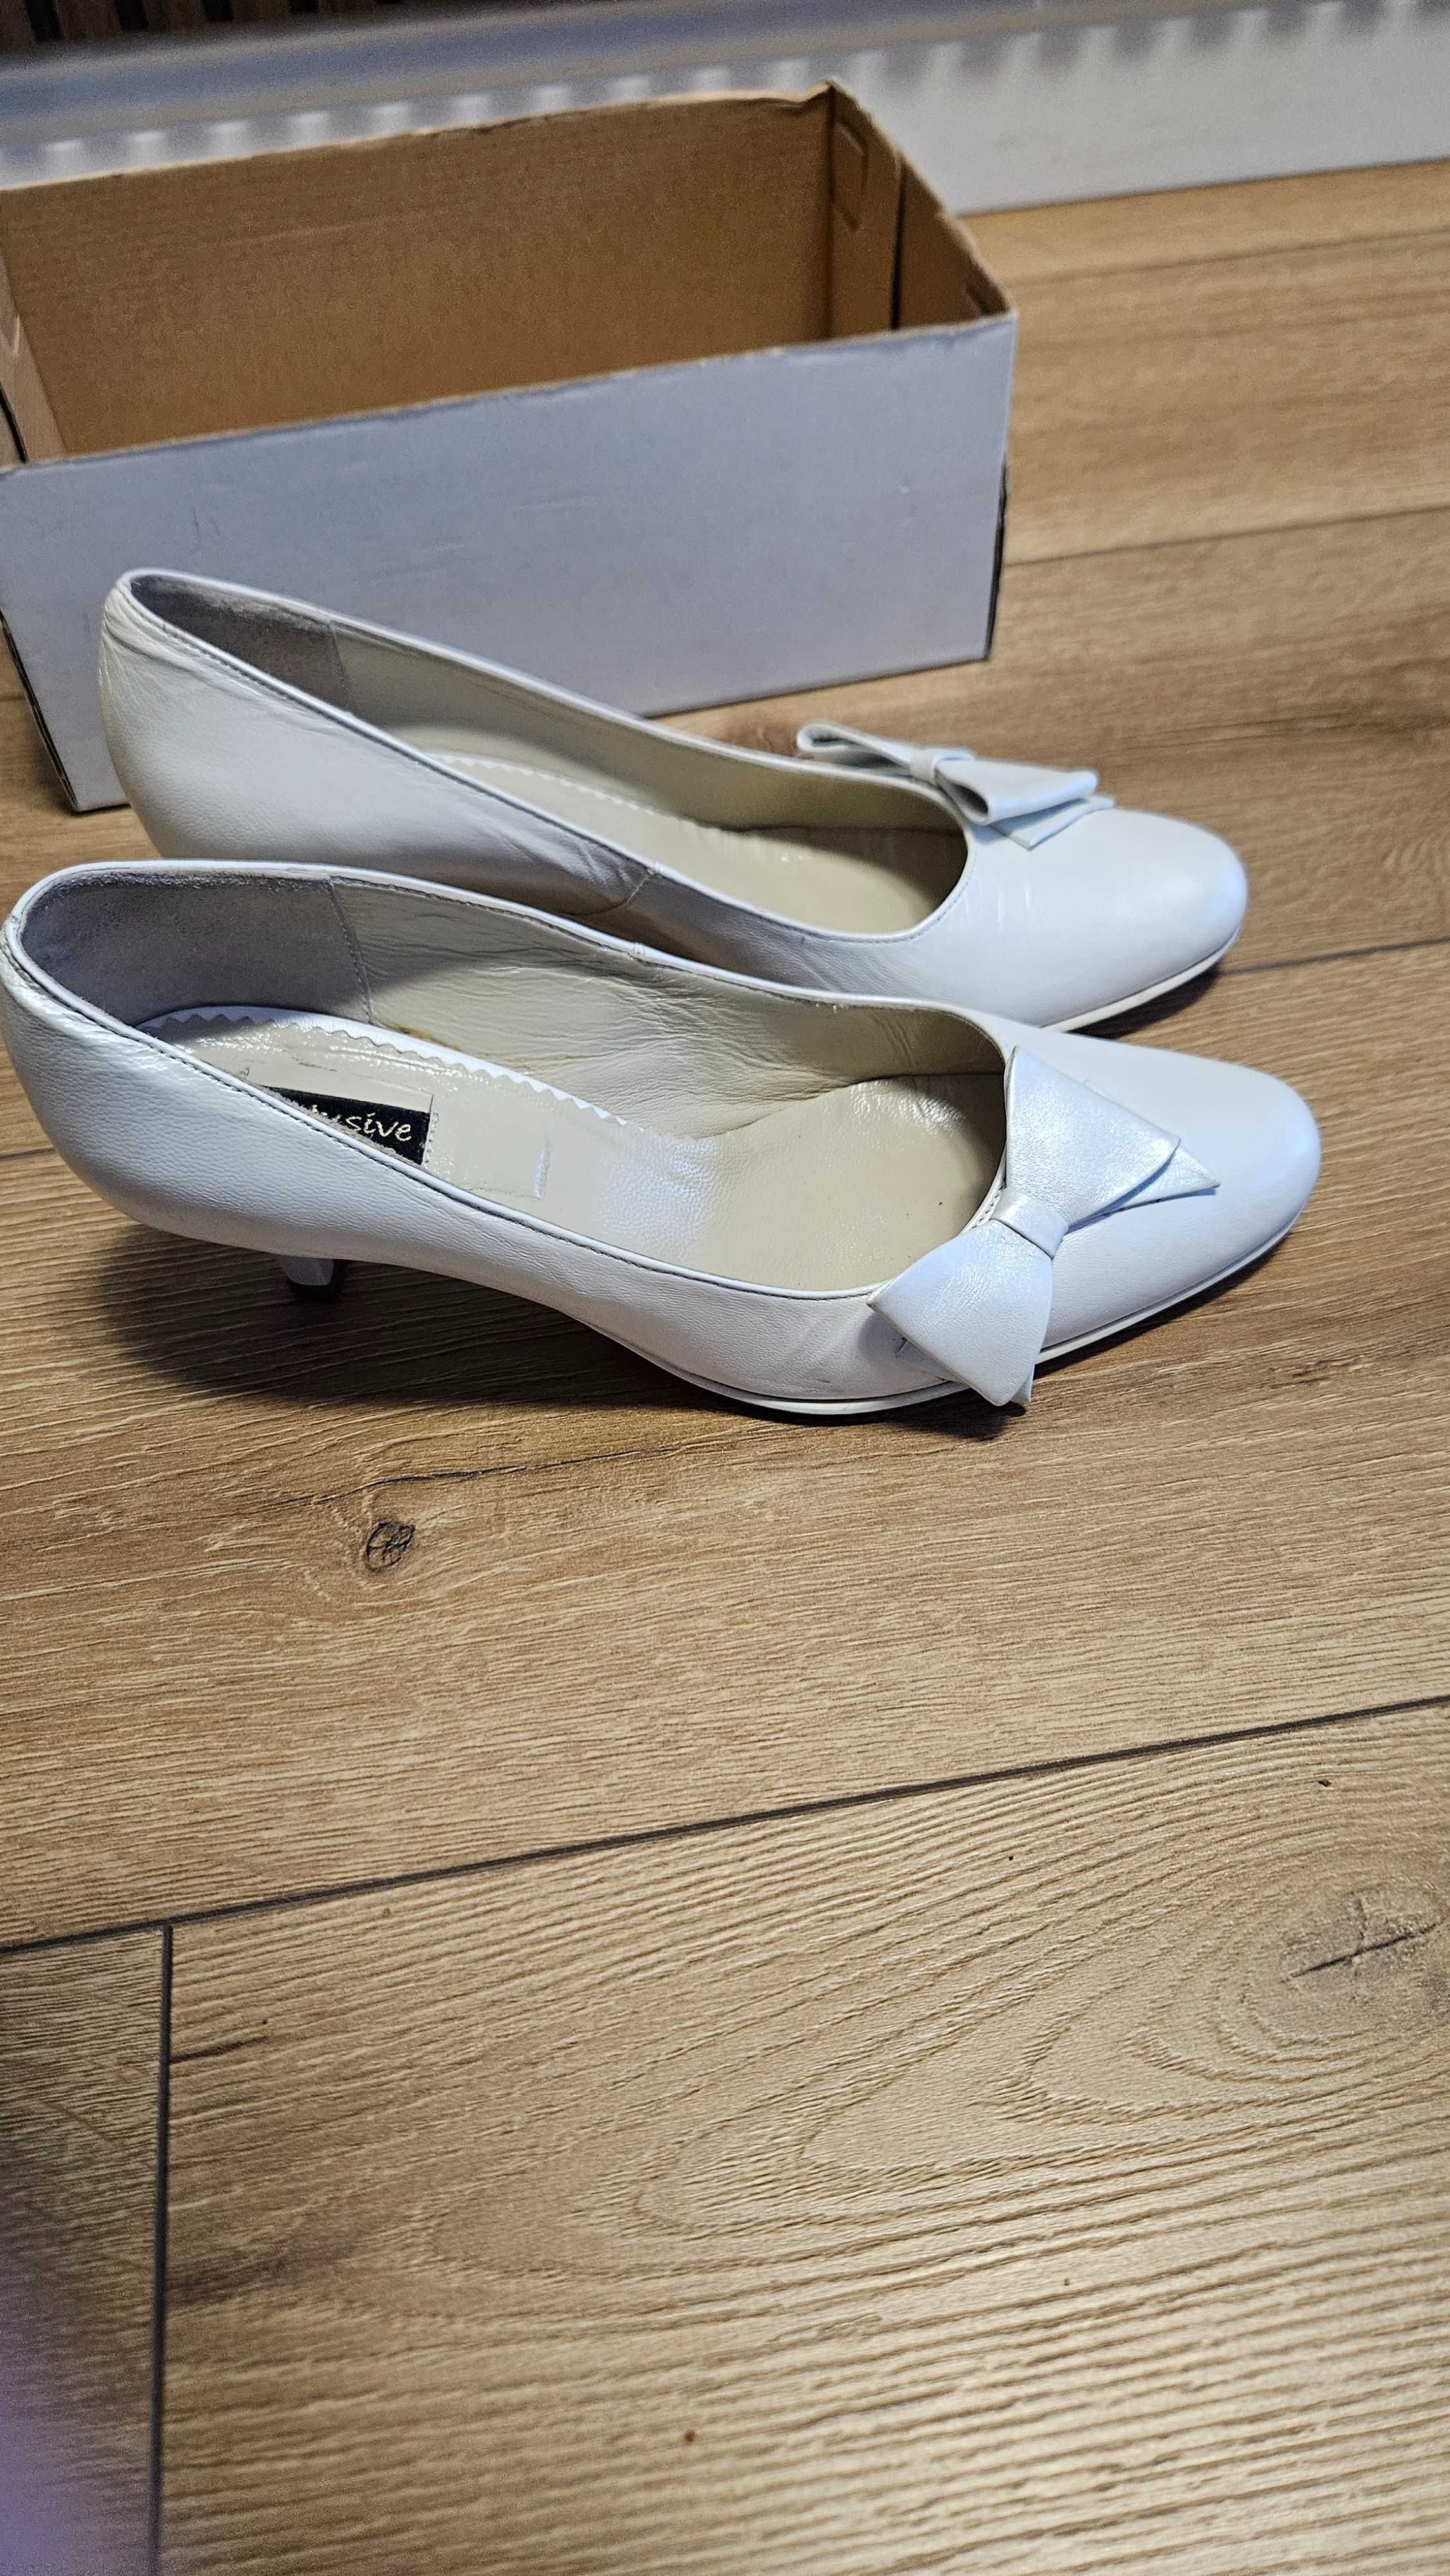 Pantofi albi sidef, de mireasa foarte comozi